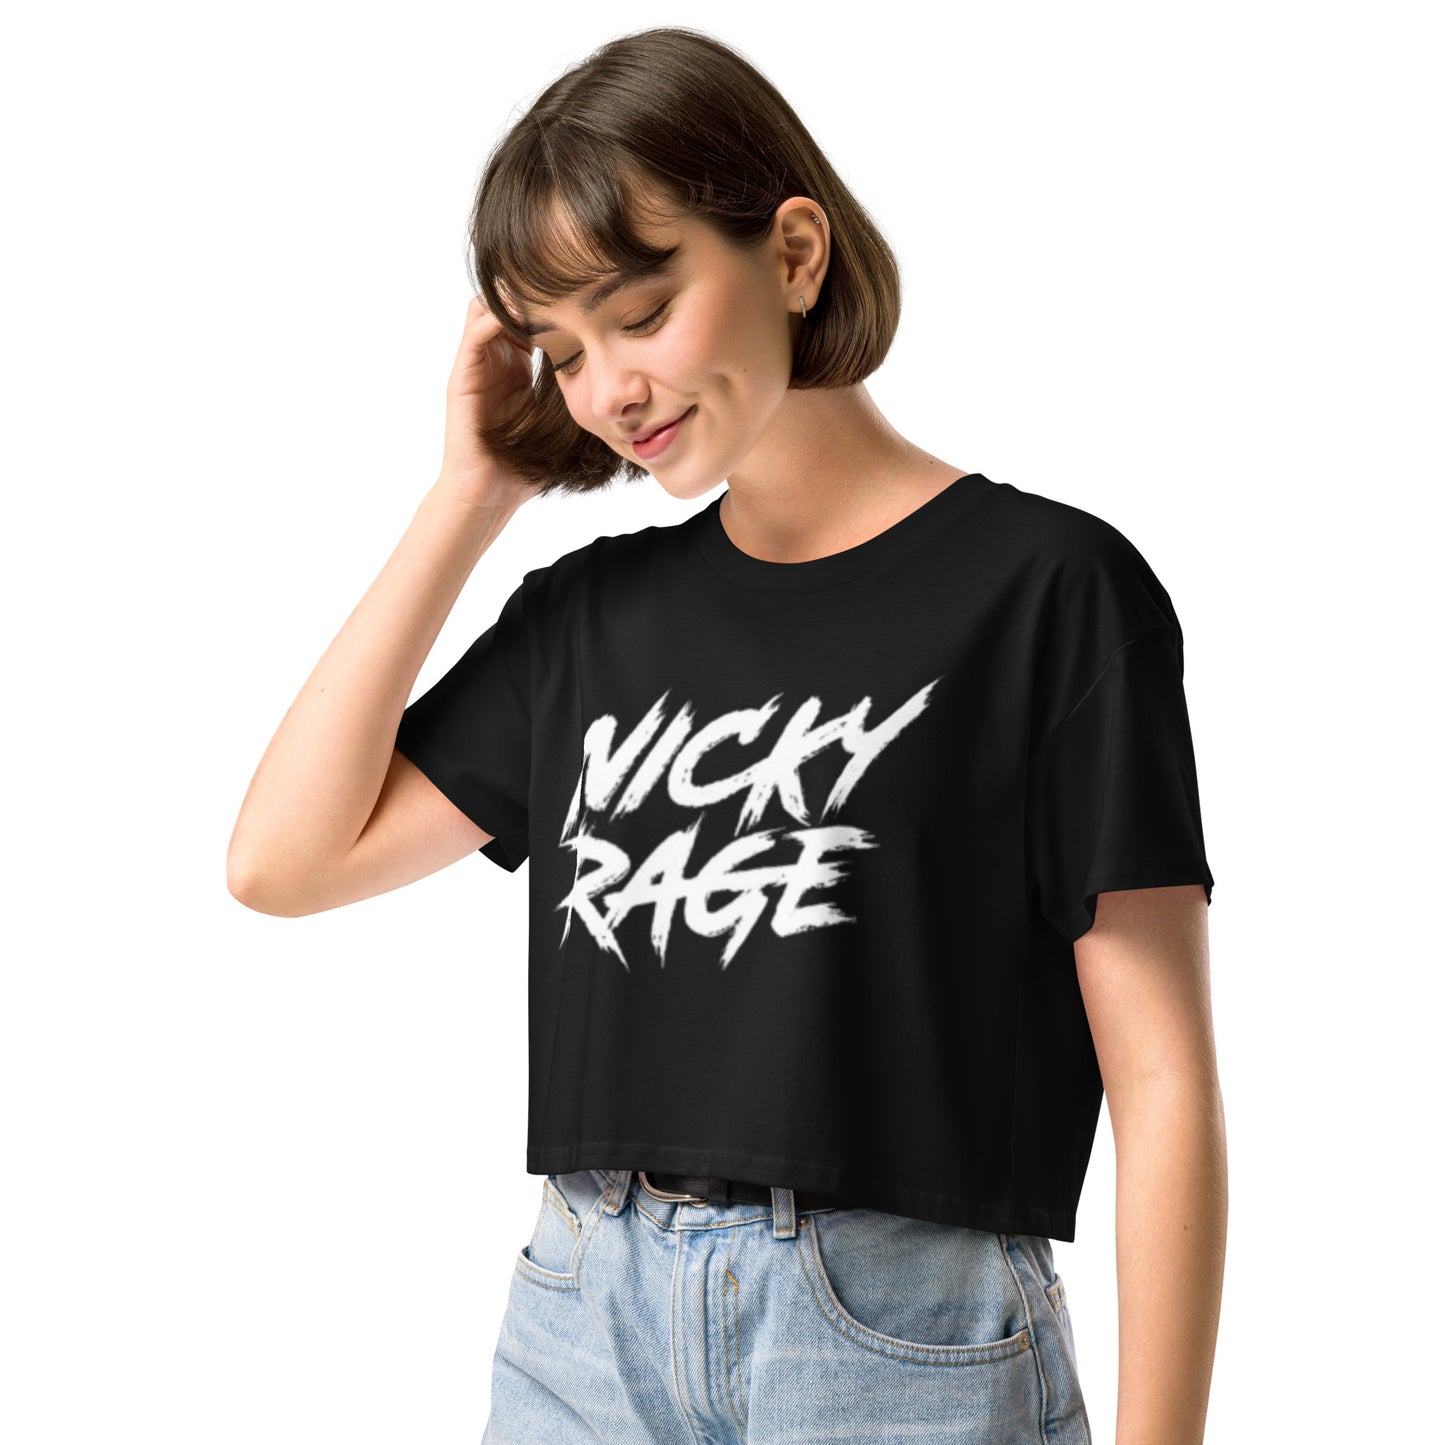 Nicky Rage crop top